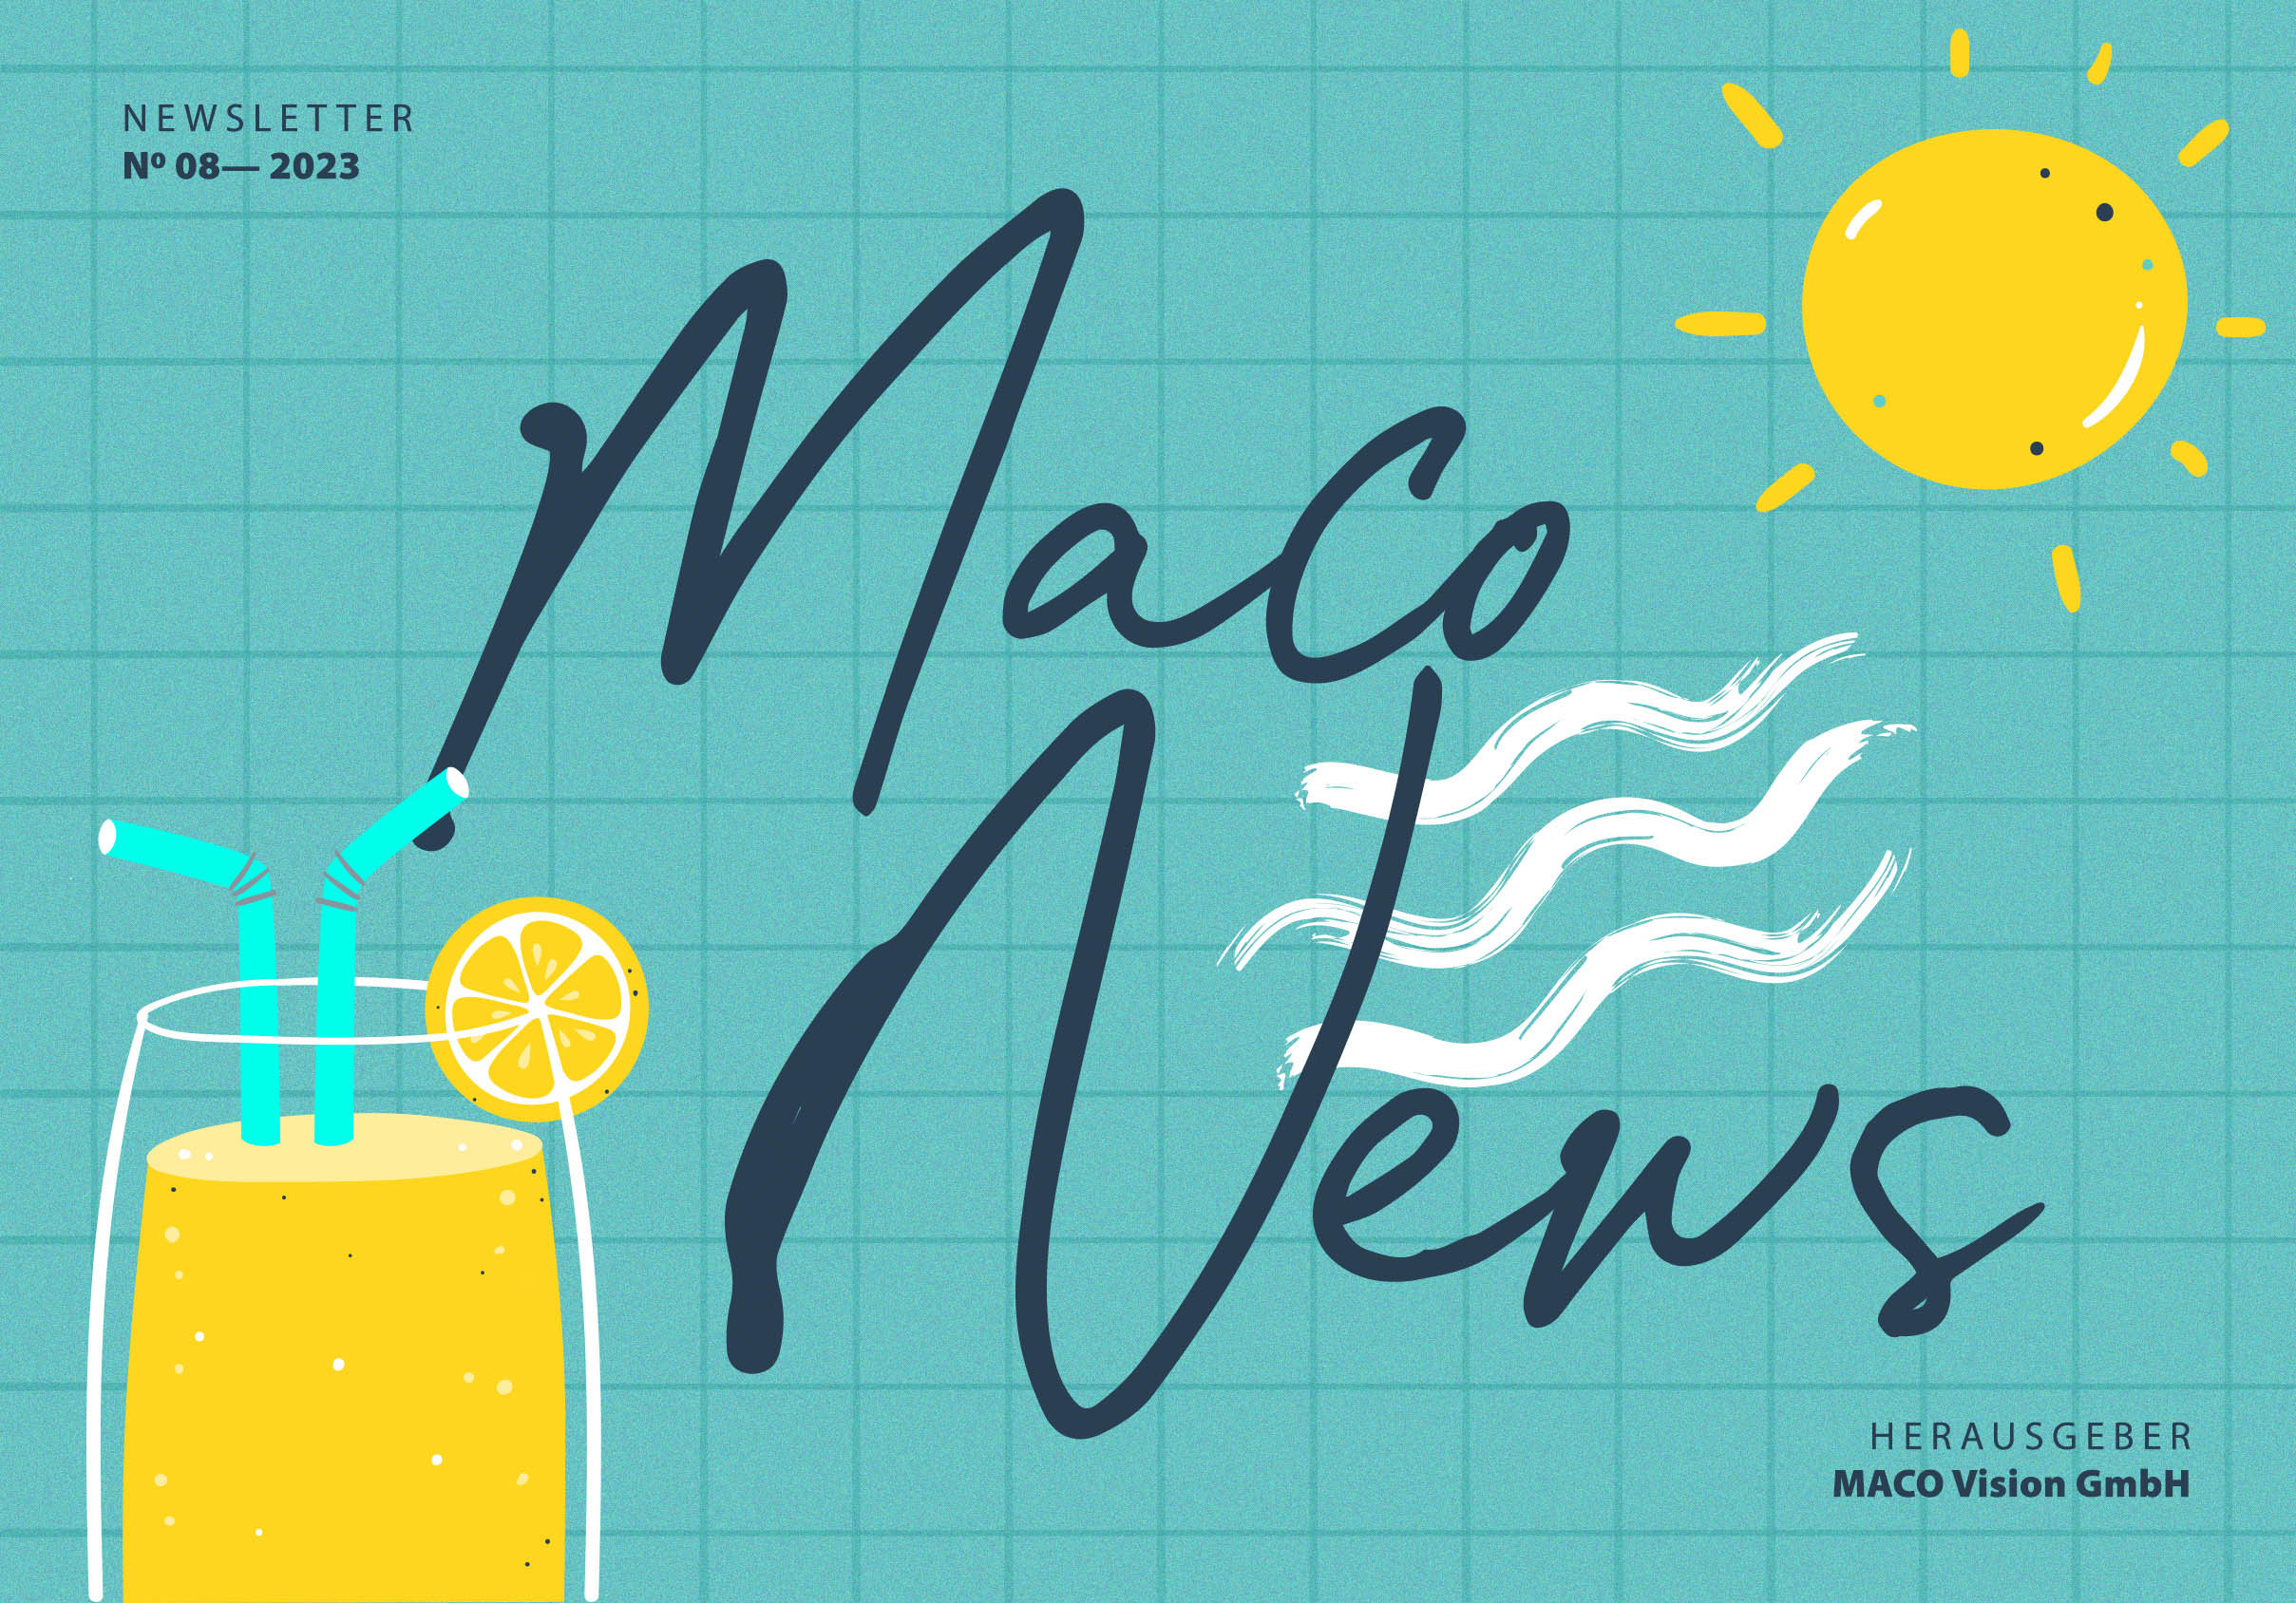 MACO News August 2023